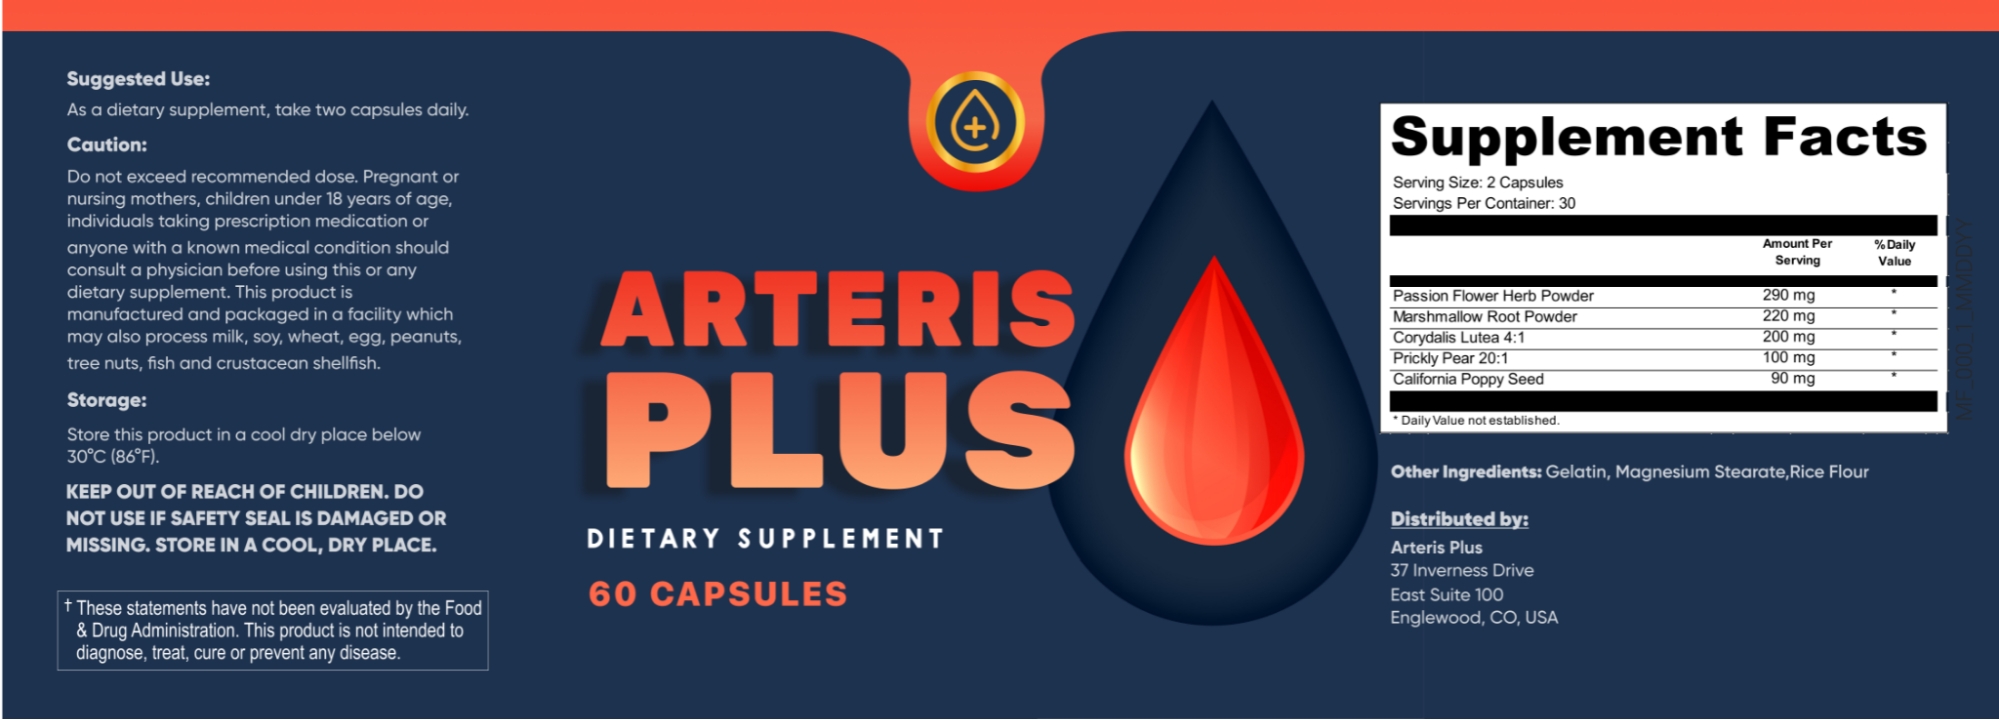 Arteris Plus Ingredients Label